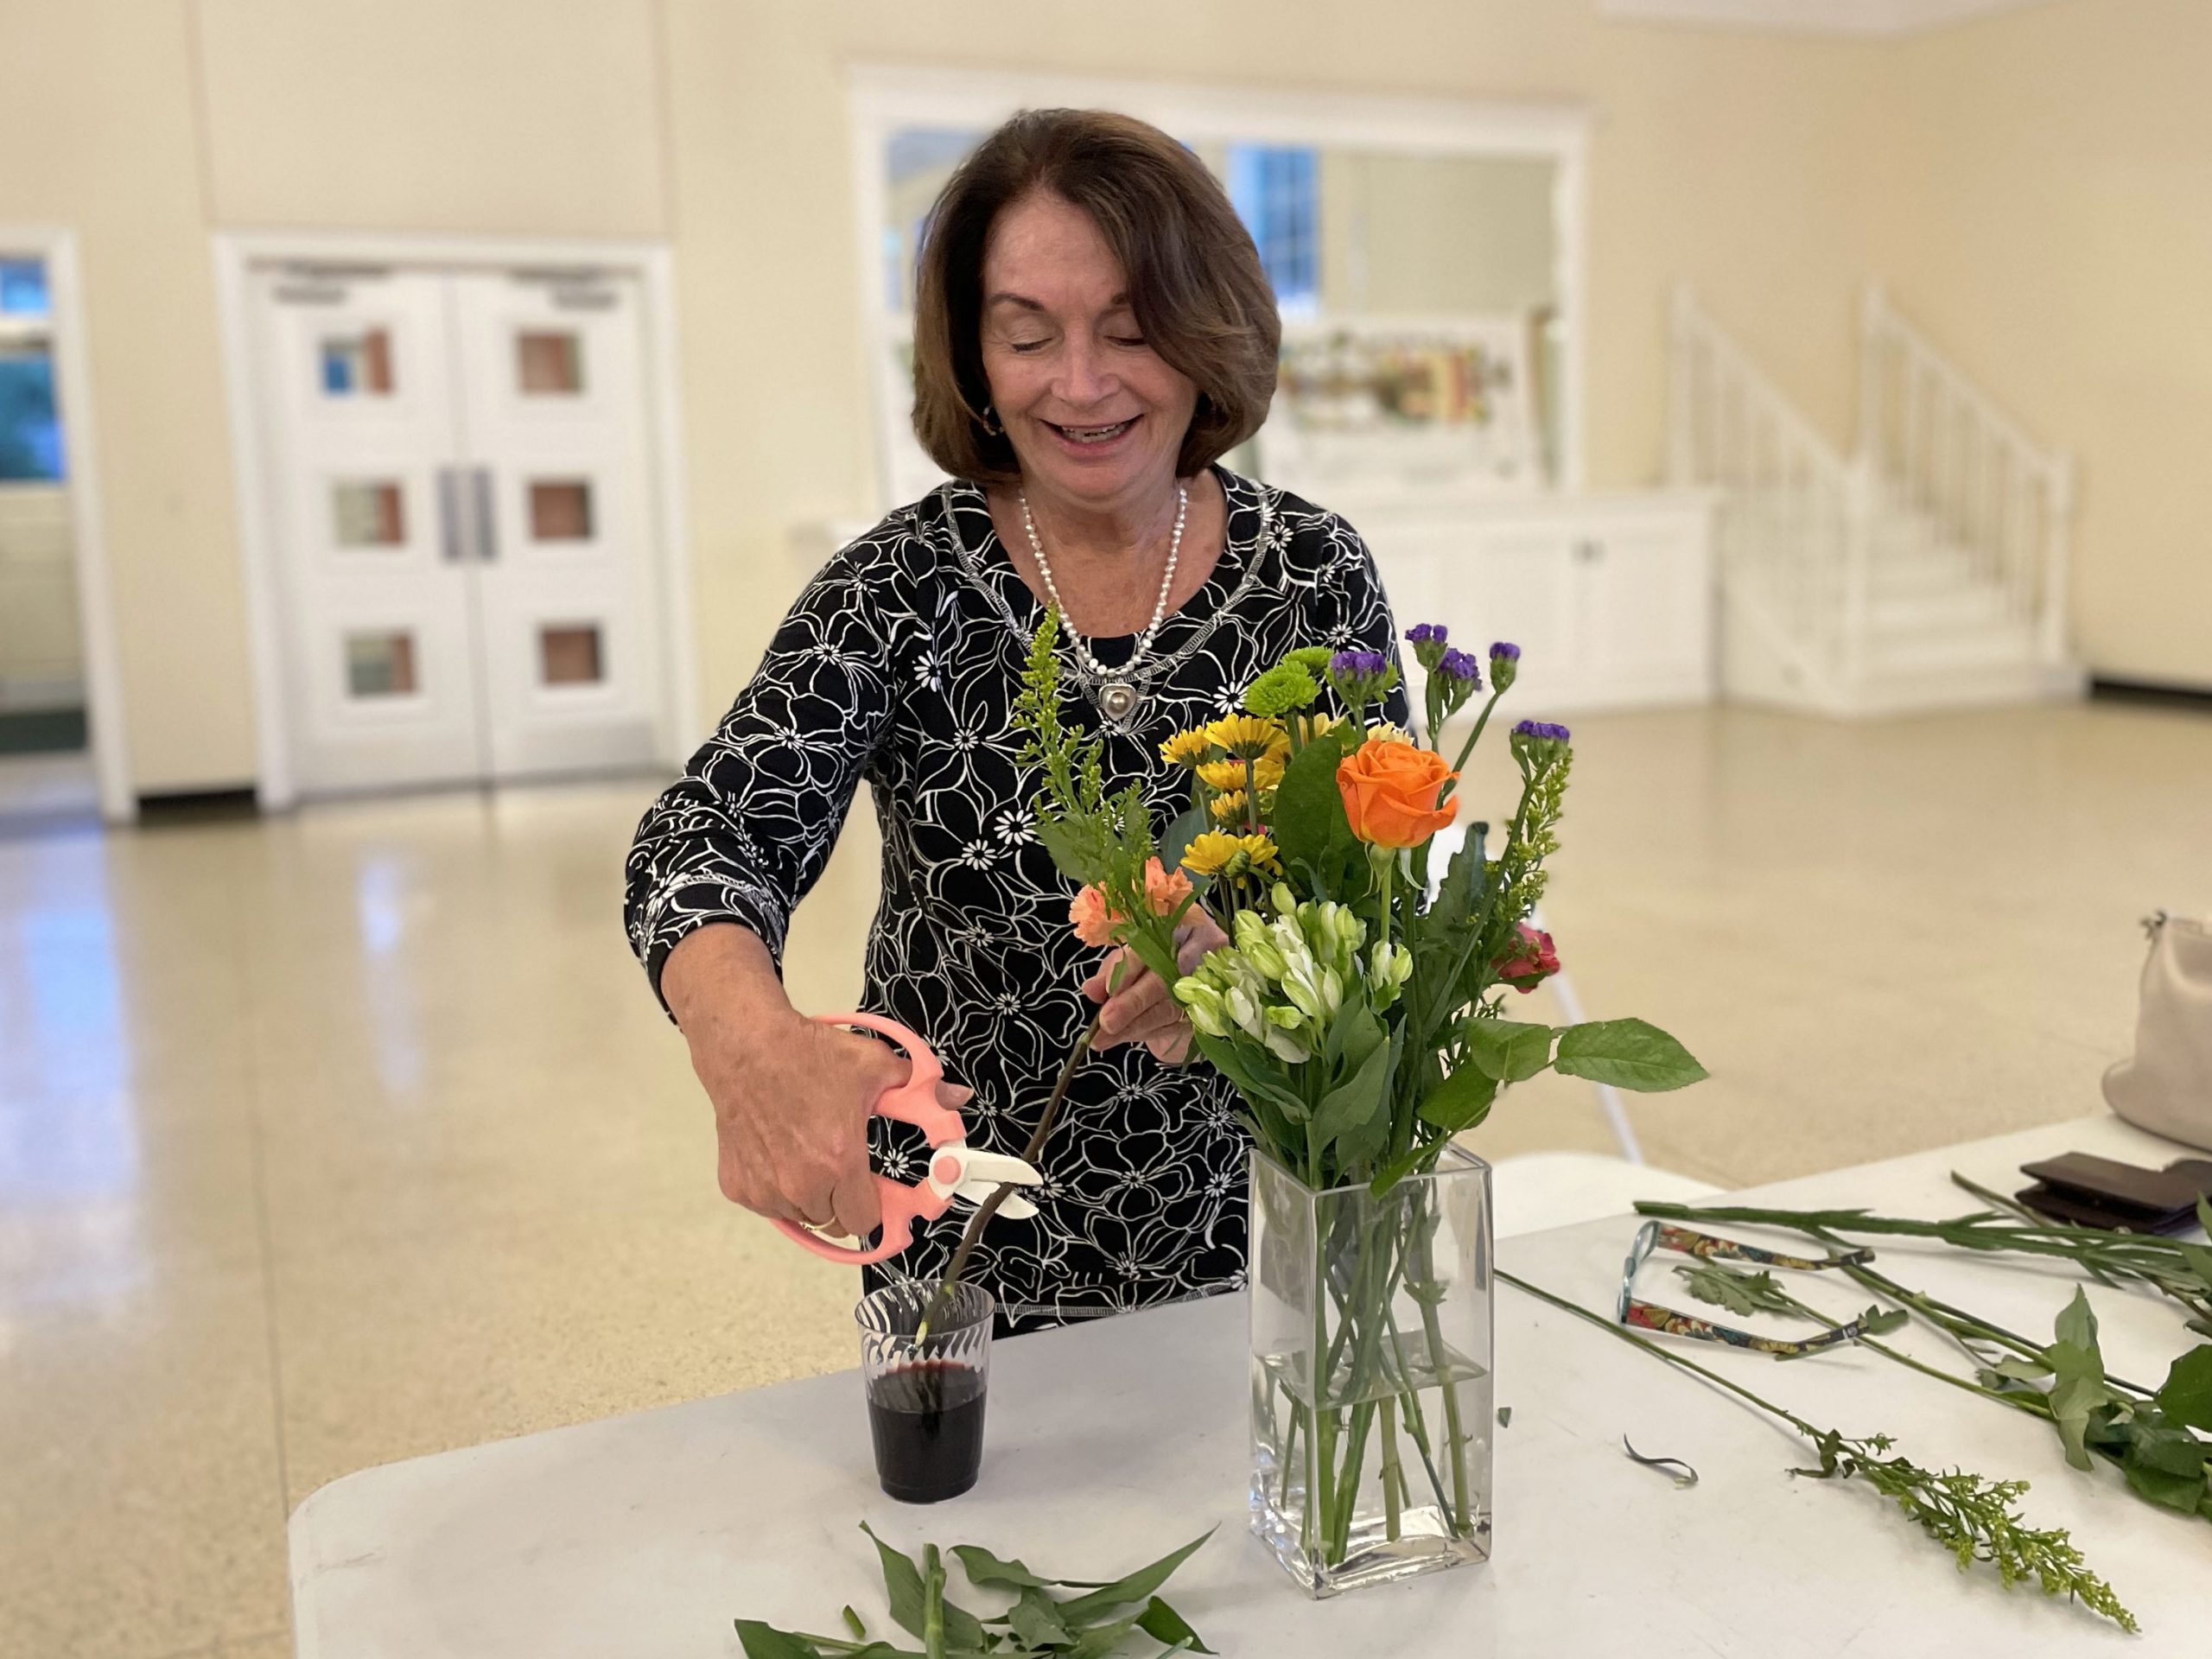 A guests cuts flowers for a flower arrangement